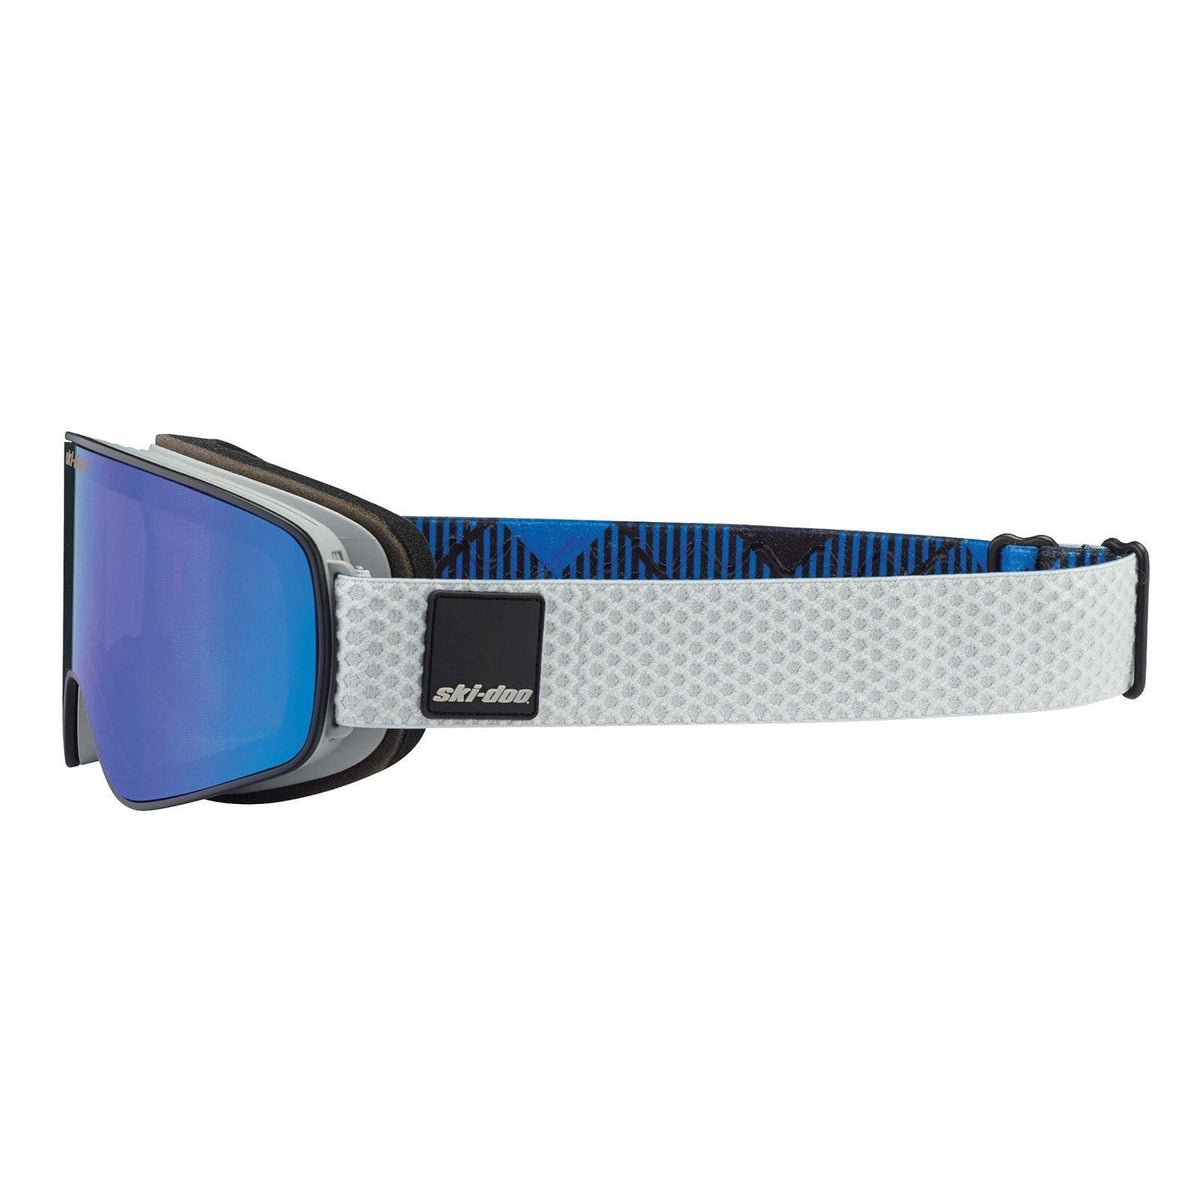 Ski-Doo EDGE Goggles (UV) / Blue / Onesize - Factory Recreation